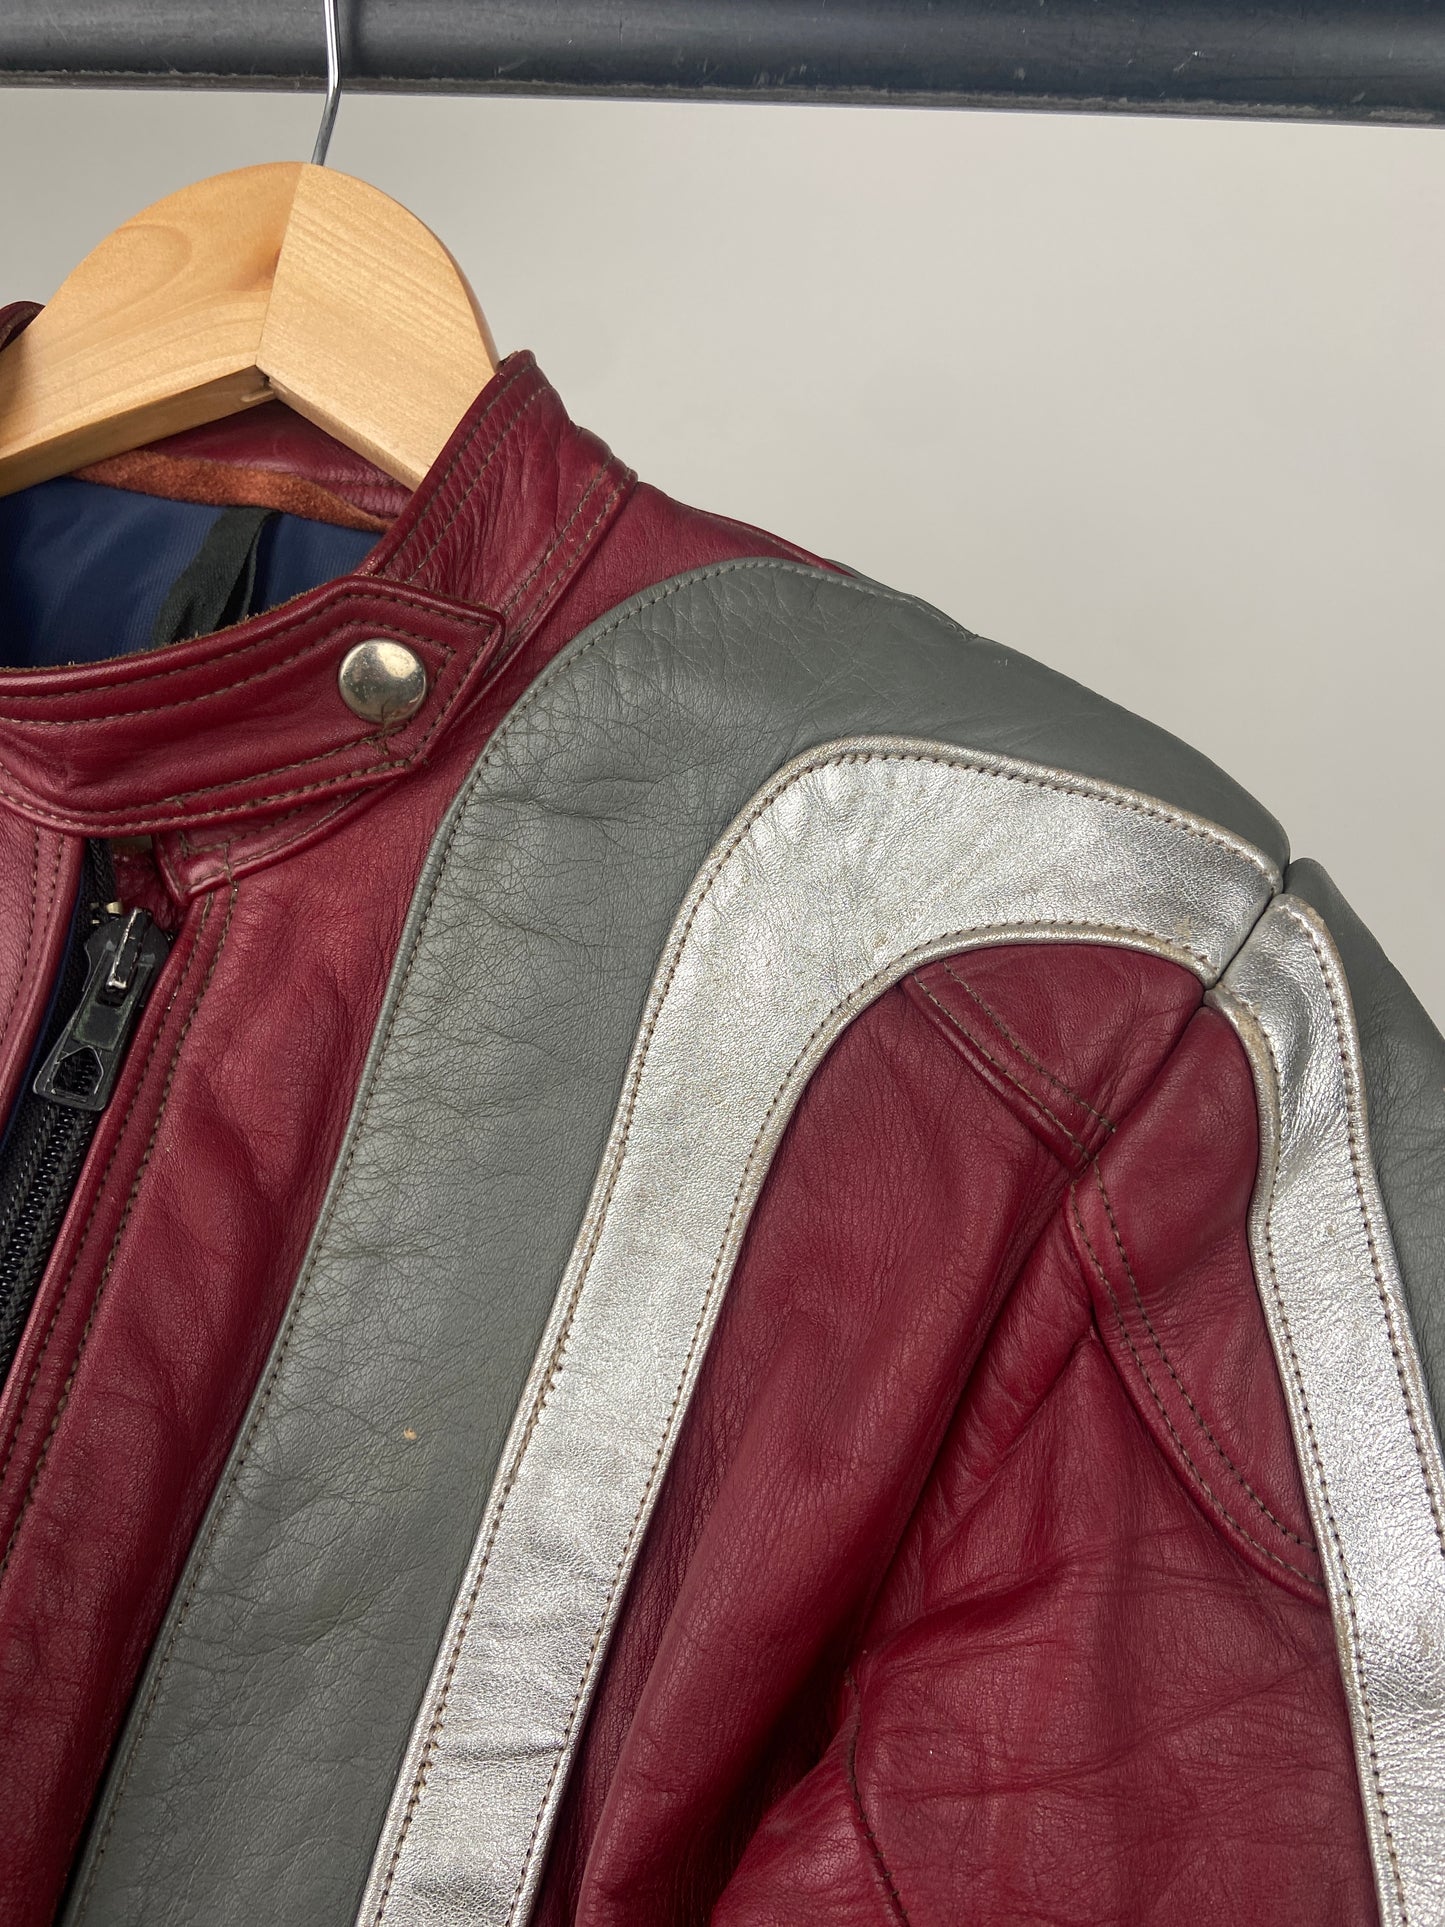 Vintage 80s Interstate Leather Motorbike Jacket